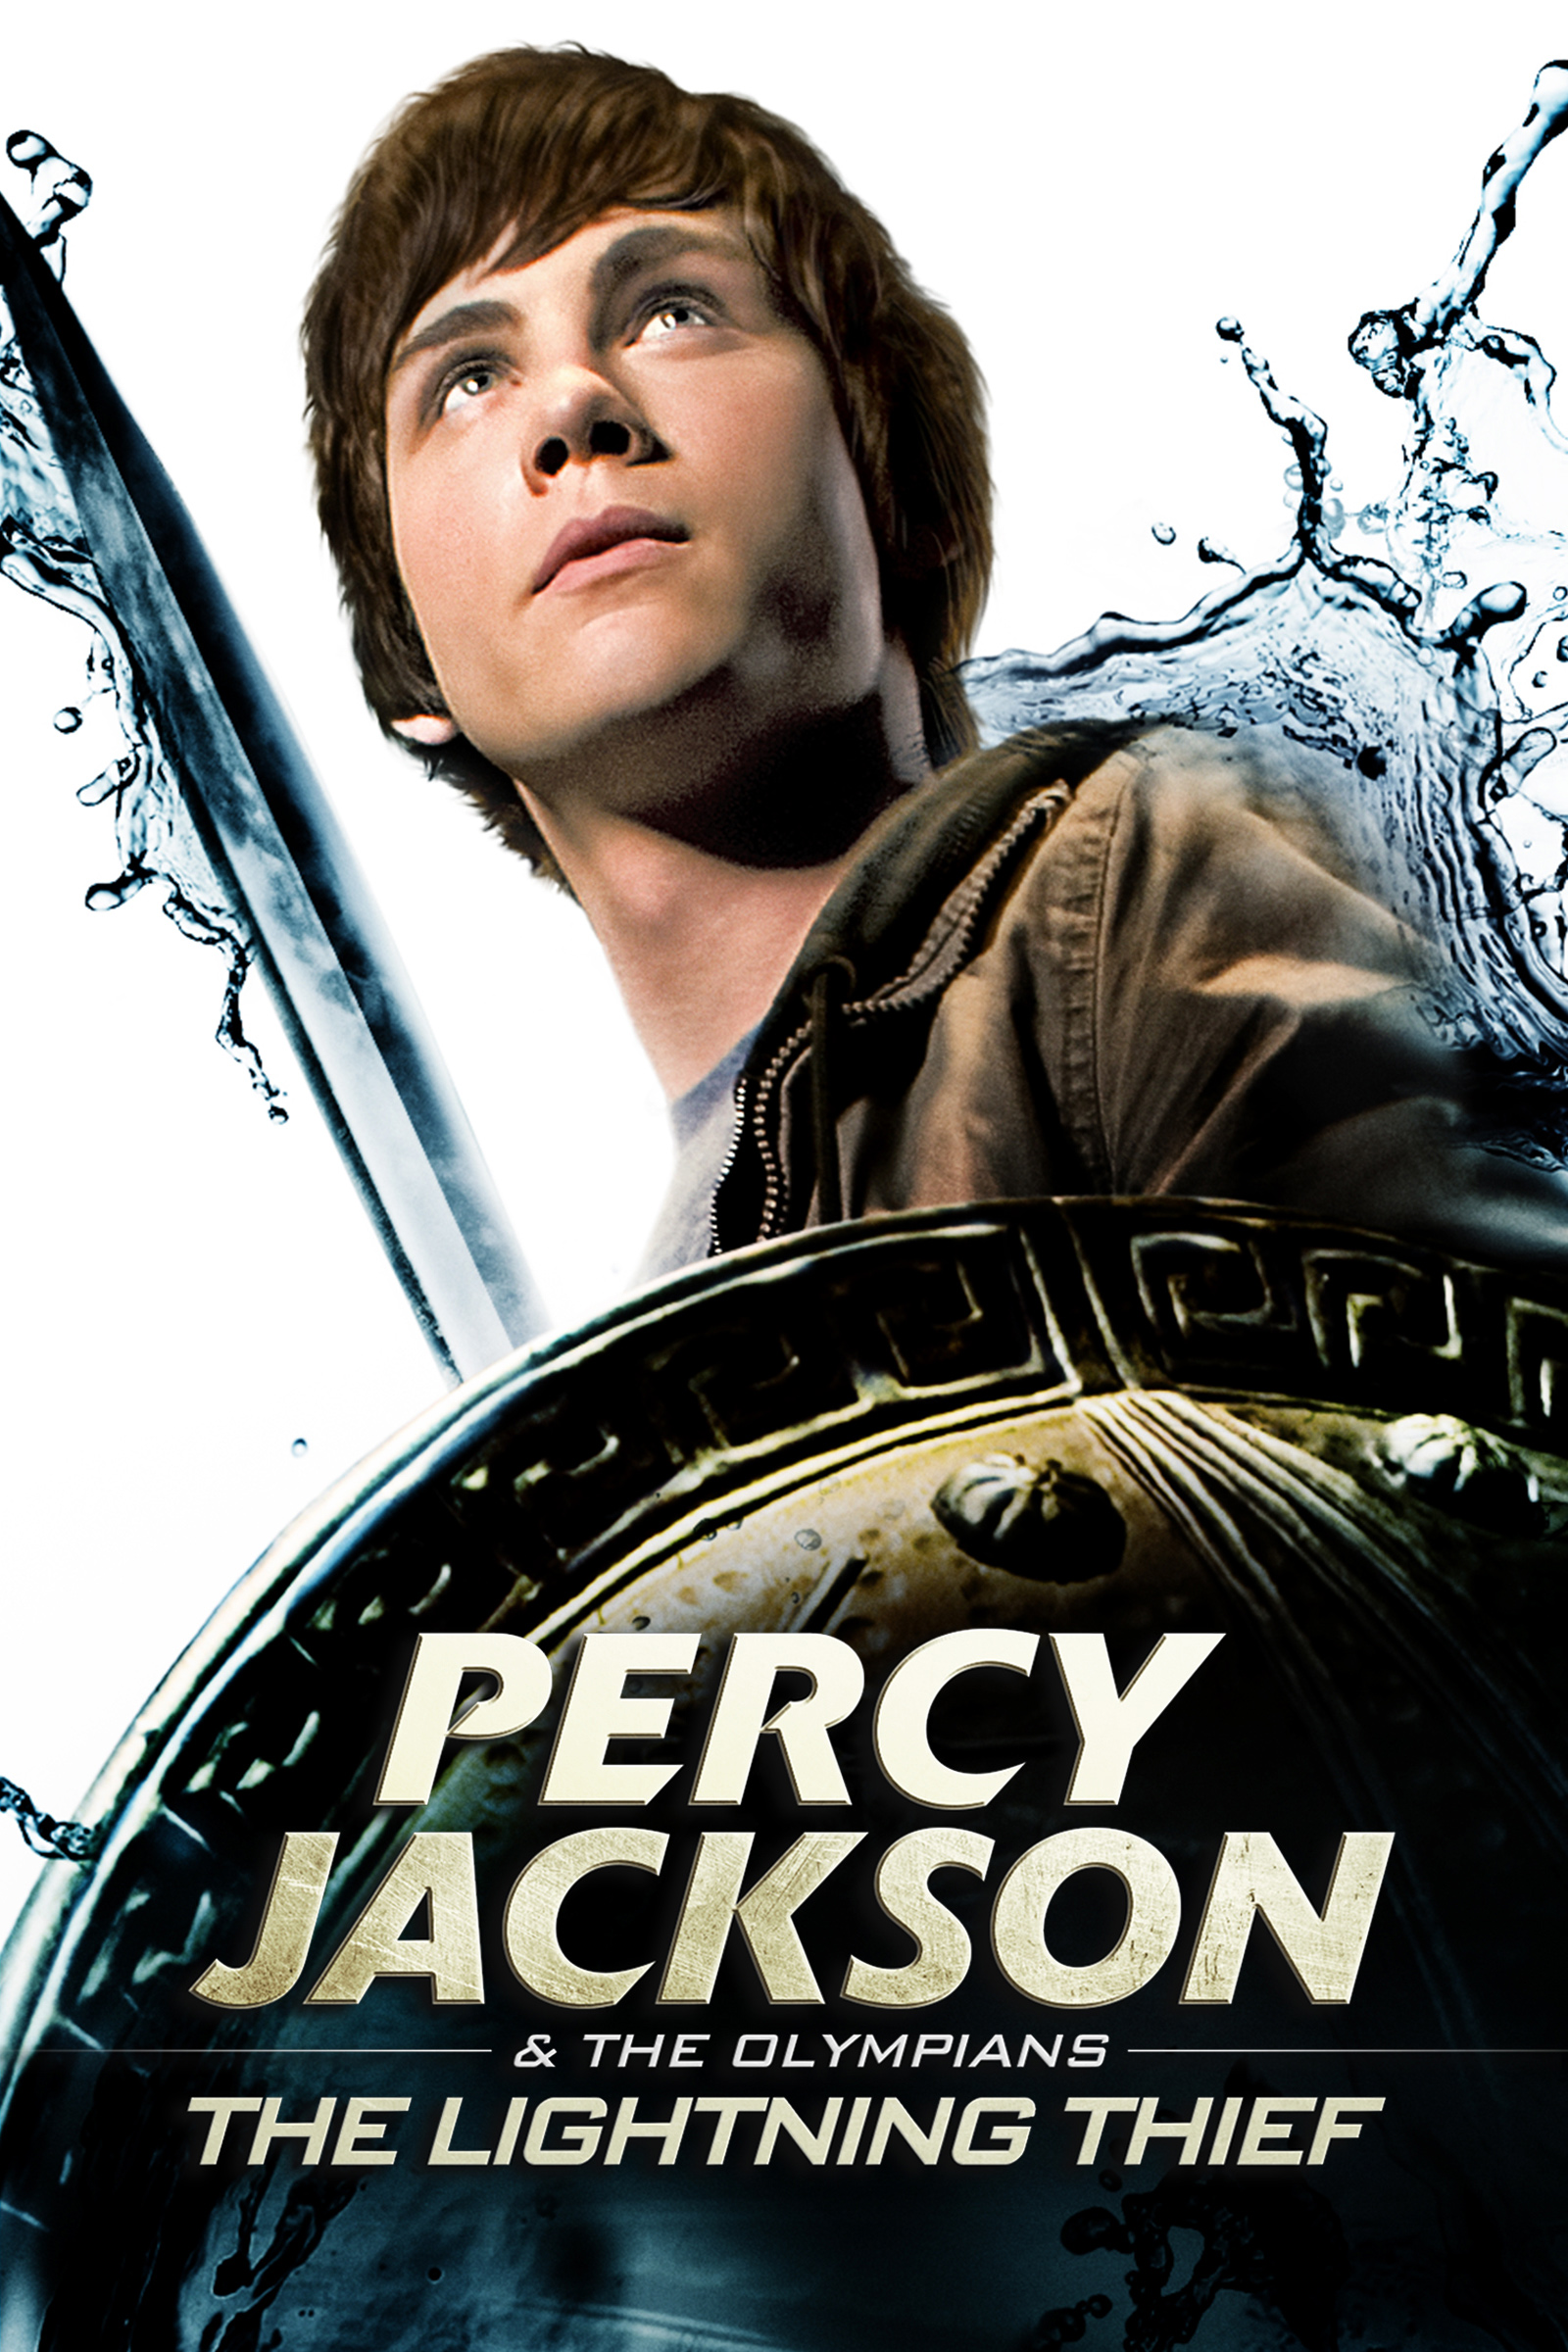 Percy jackson and the lightning thief full movie